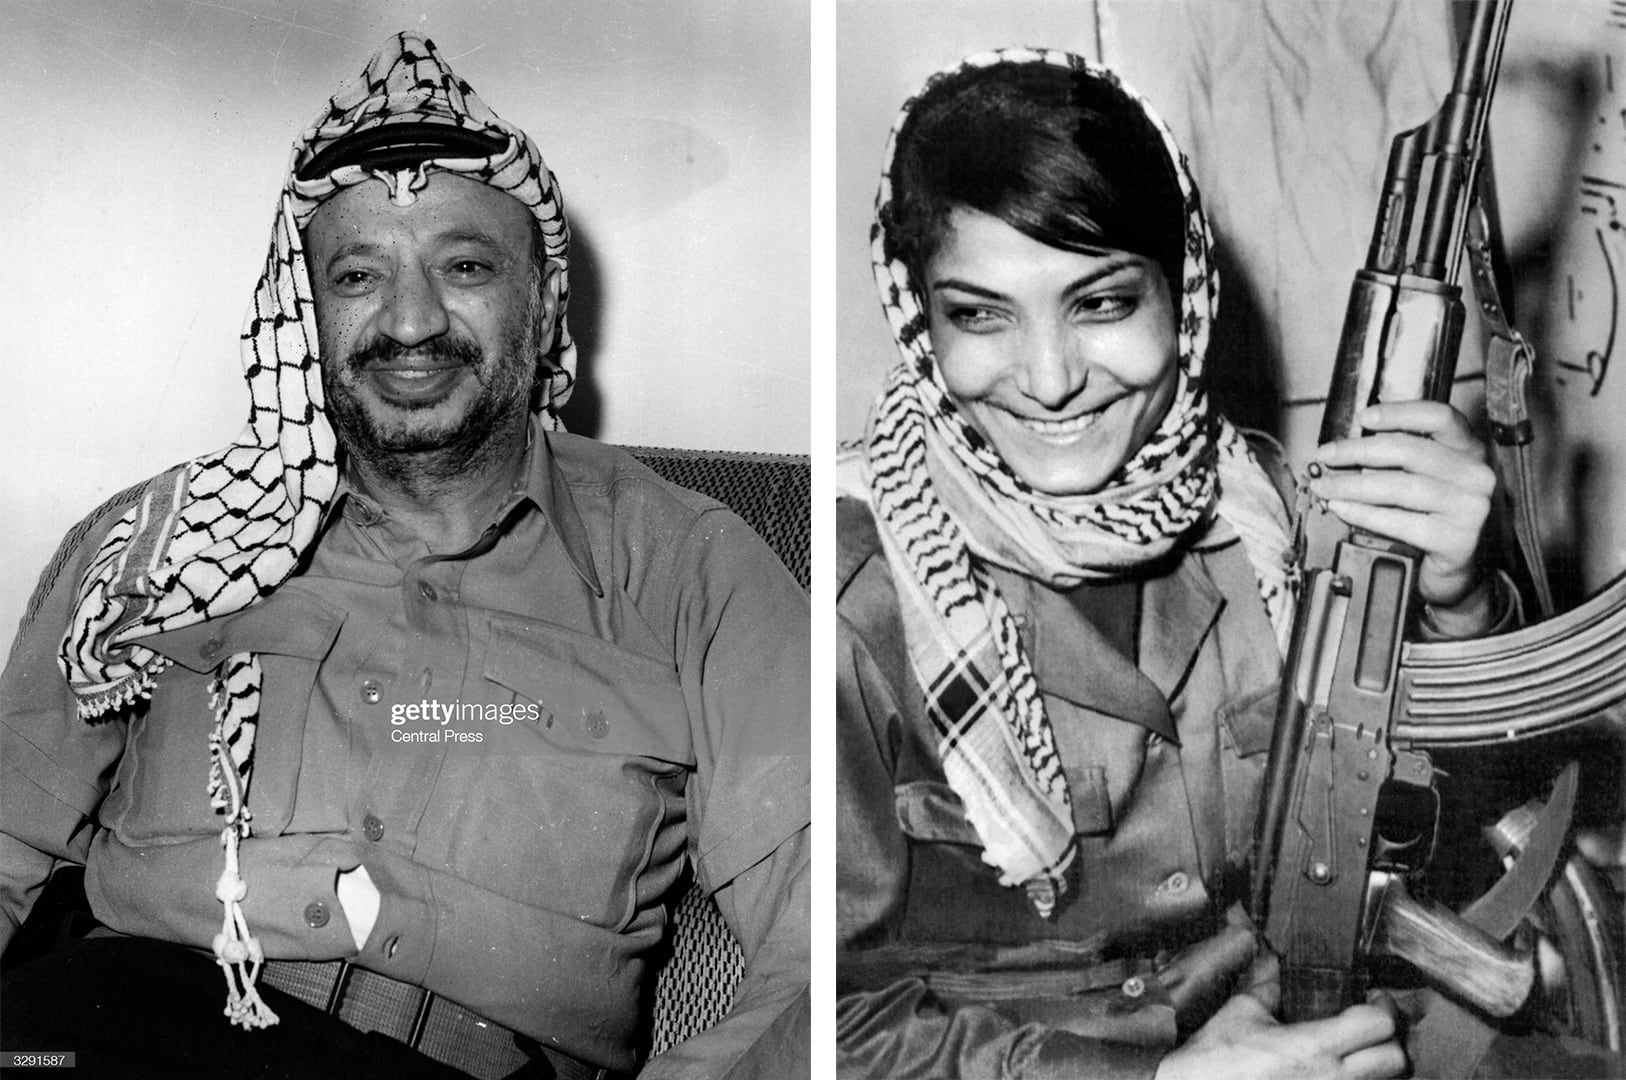 Retratos de Yasser Arafat y Leila Khaled usando kufiyas palestinas